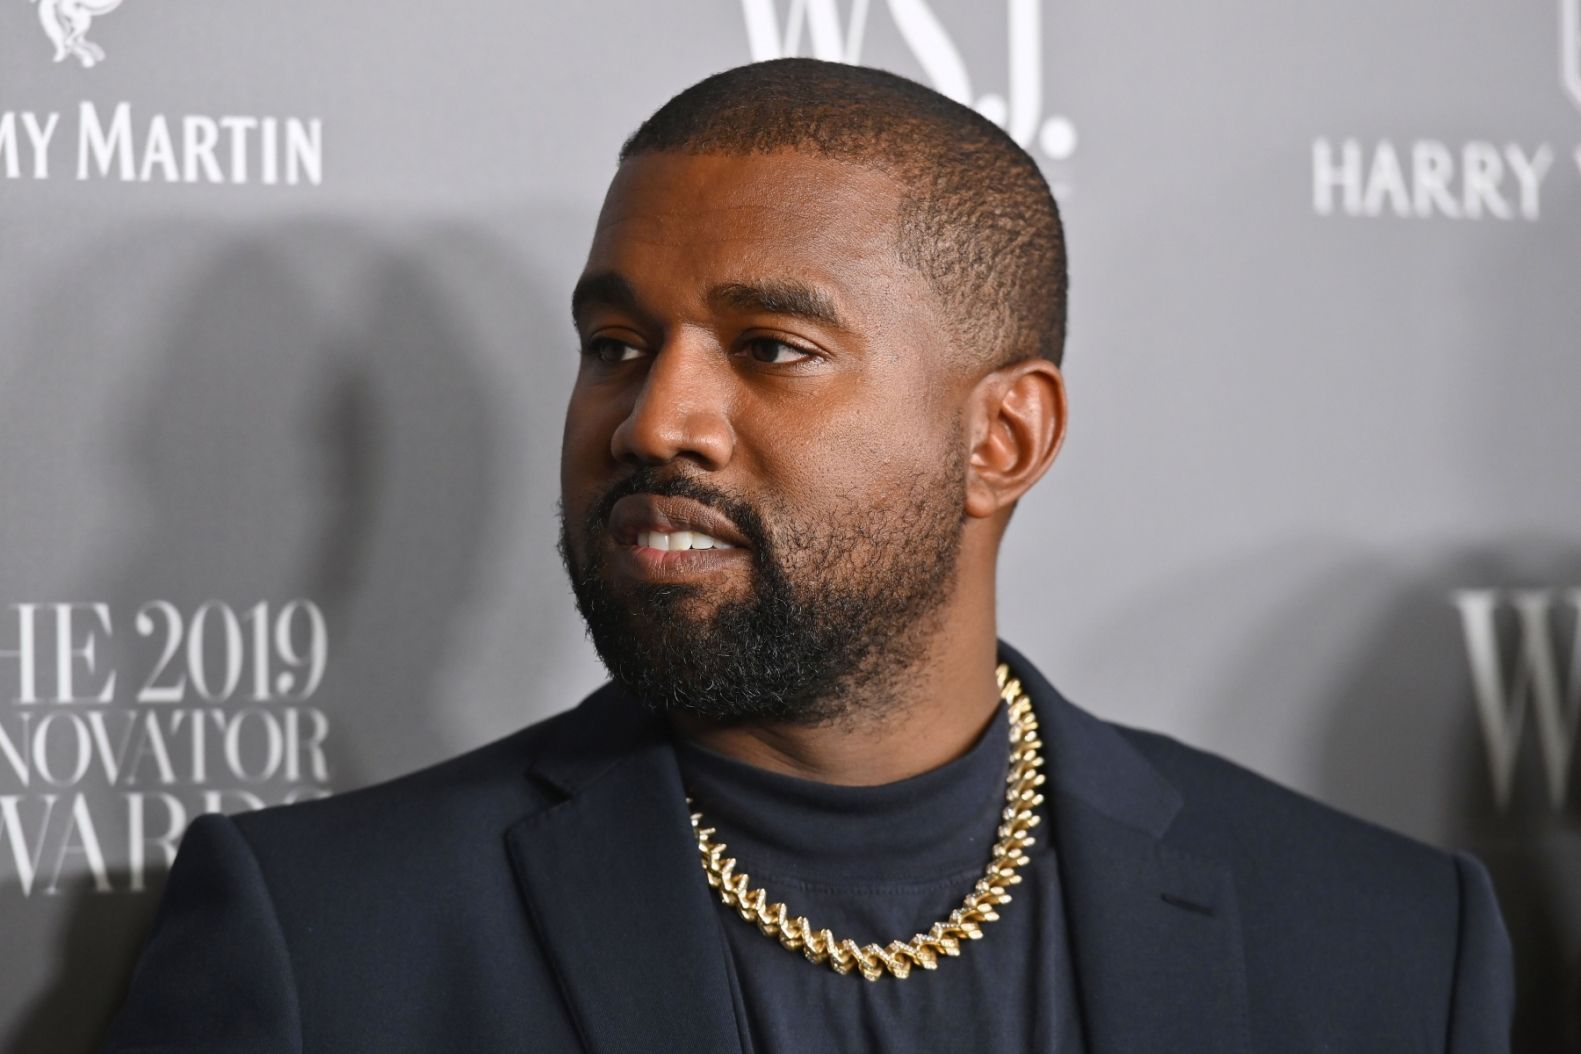 Muere Kanye West tras accidente automovilístico